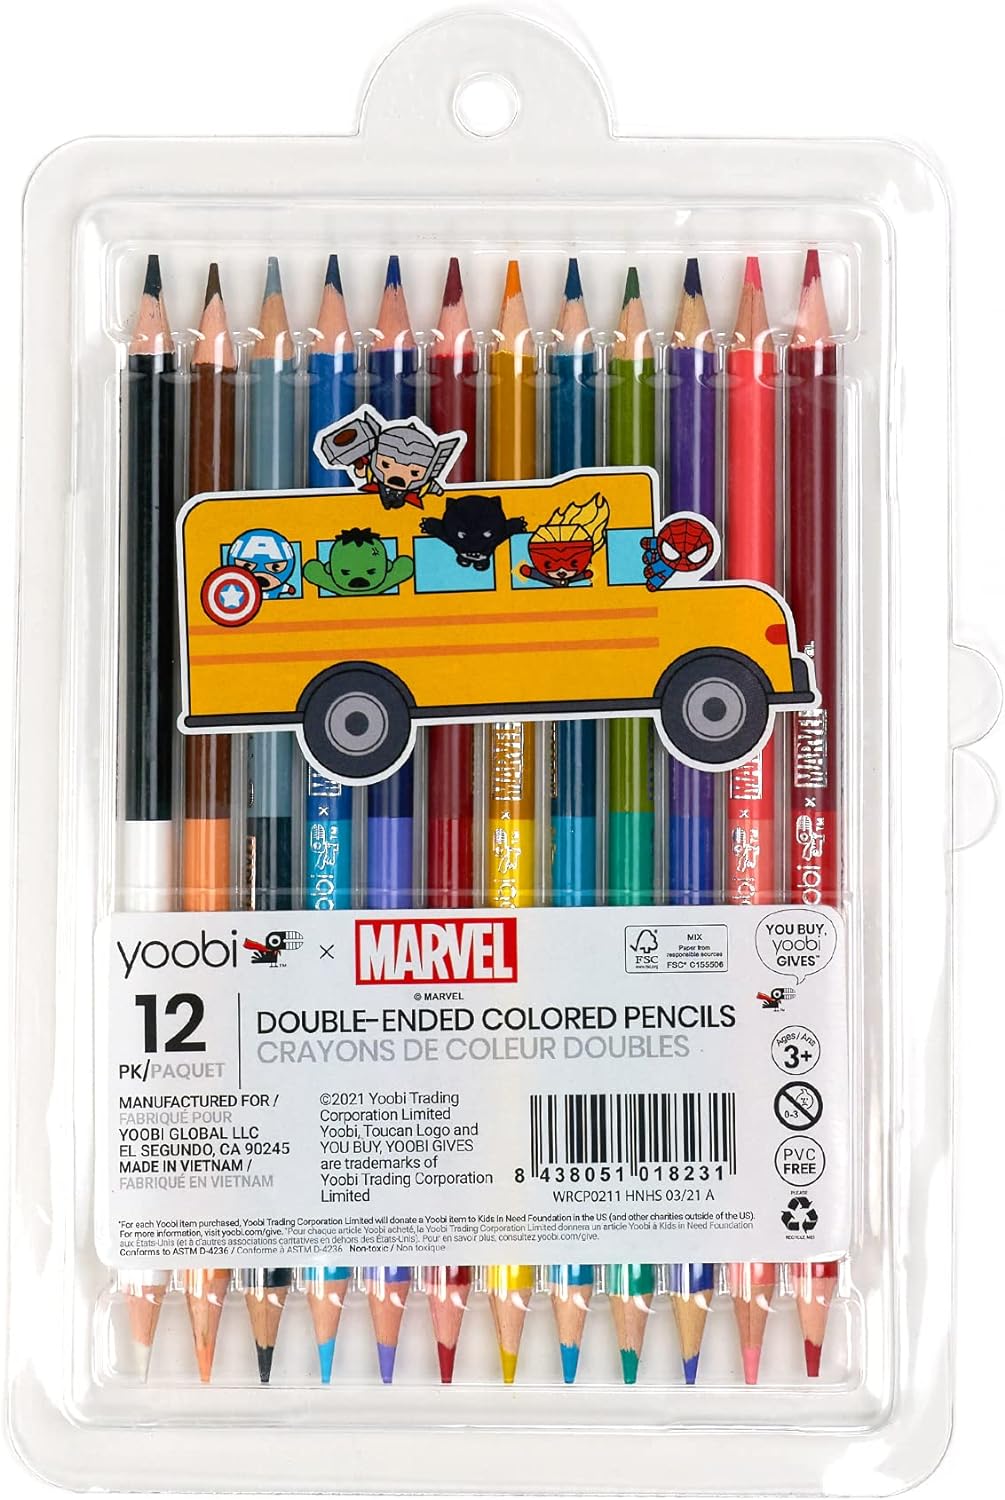 Global trade of pencils